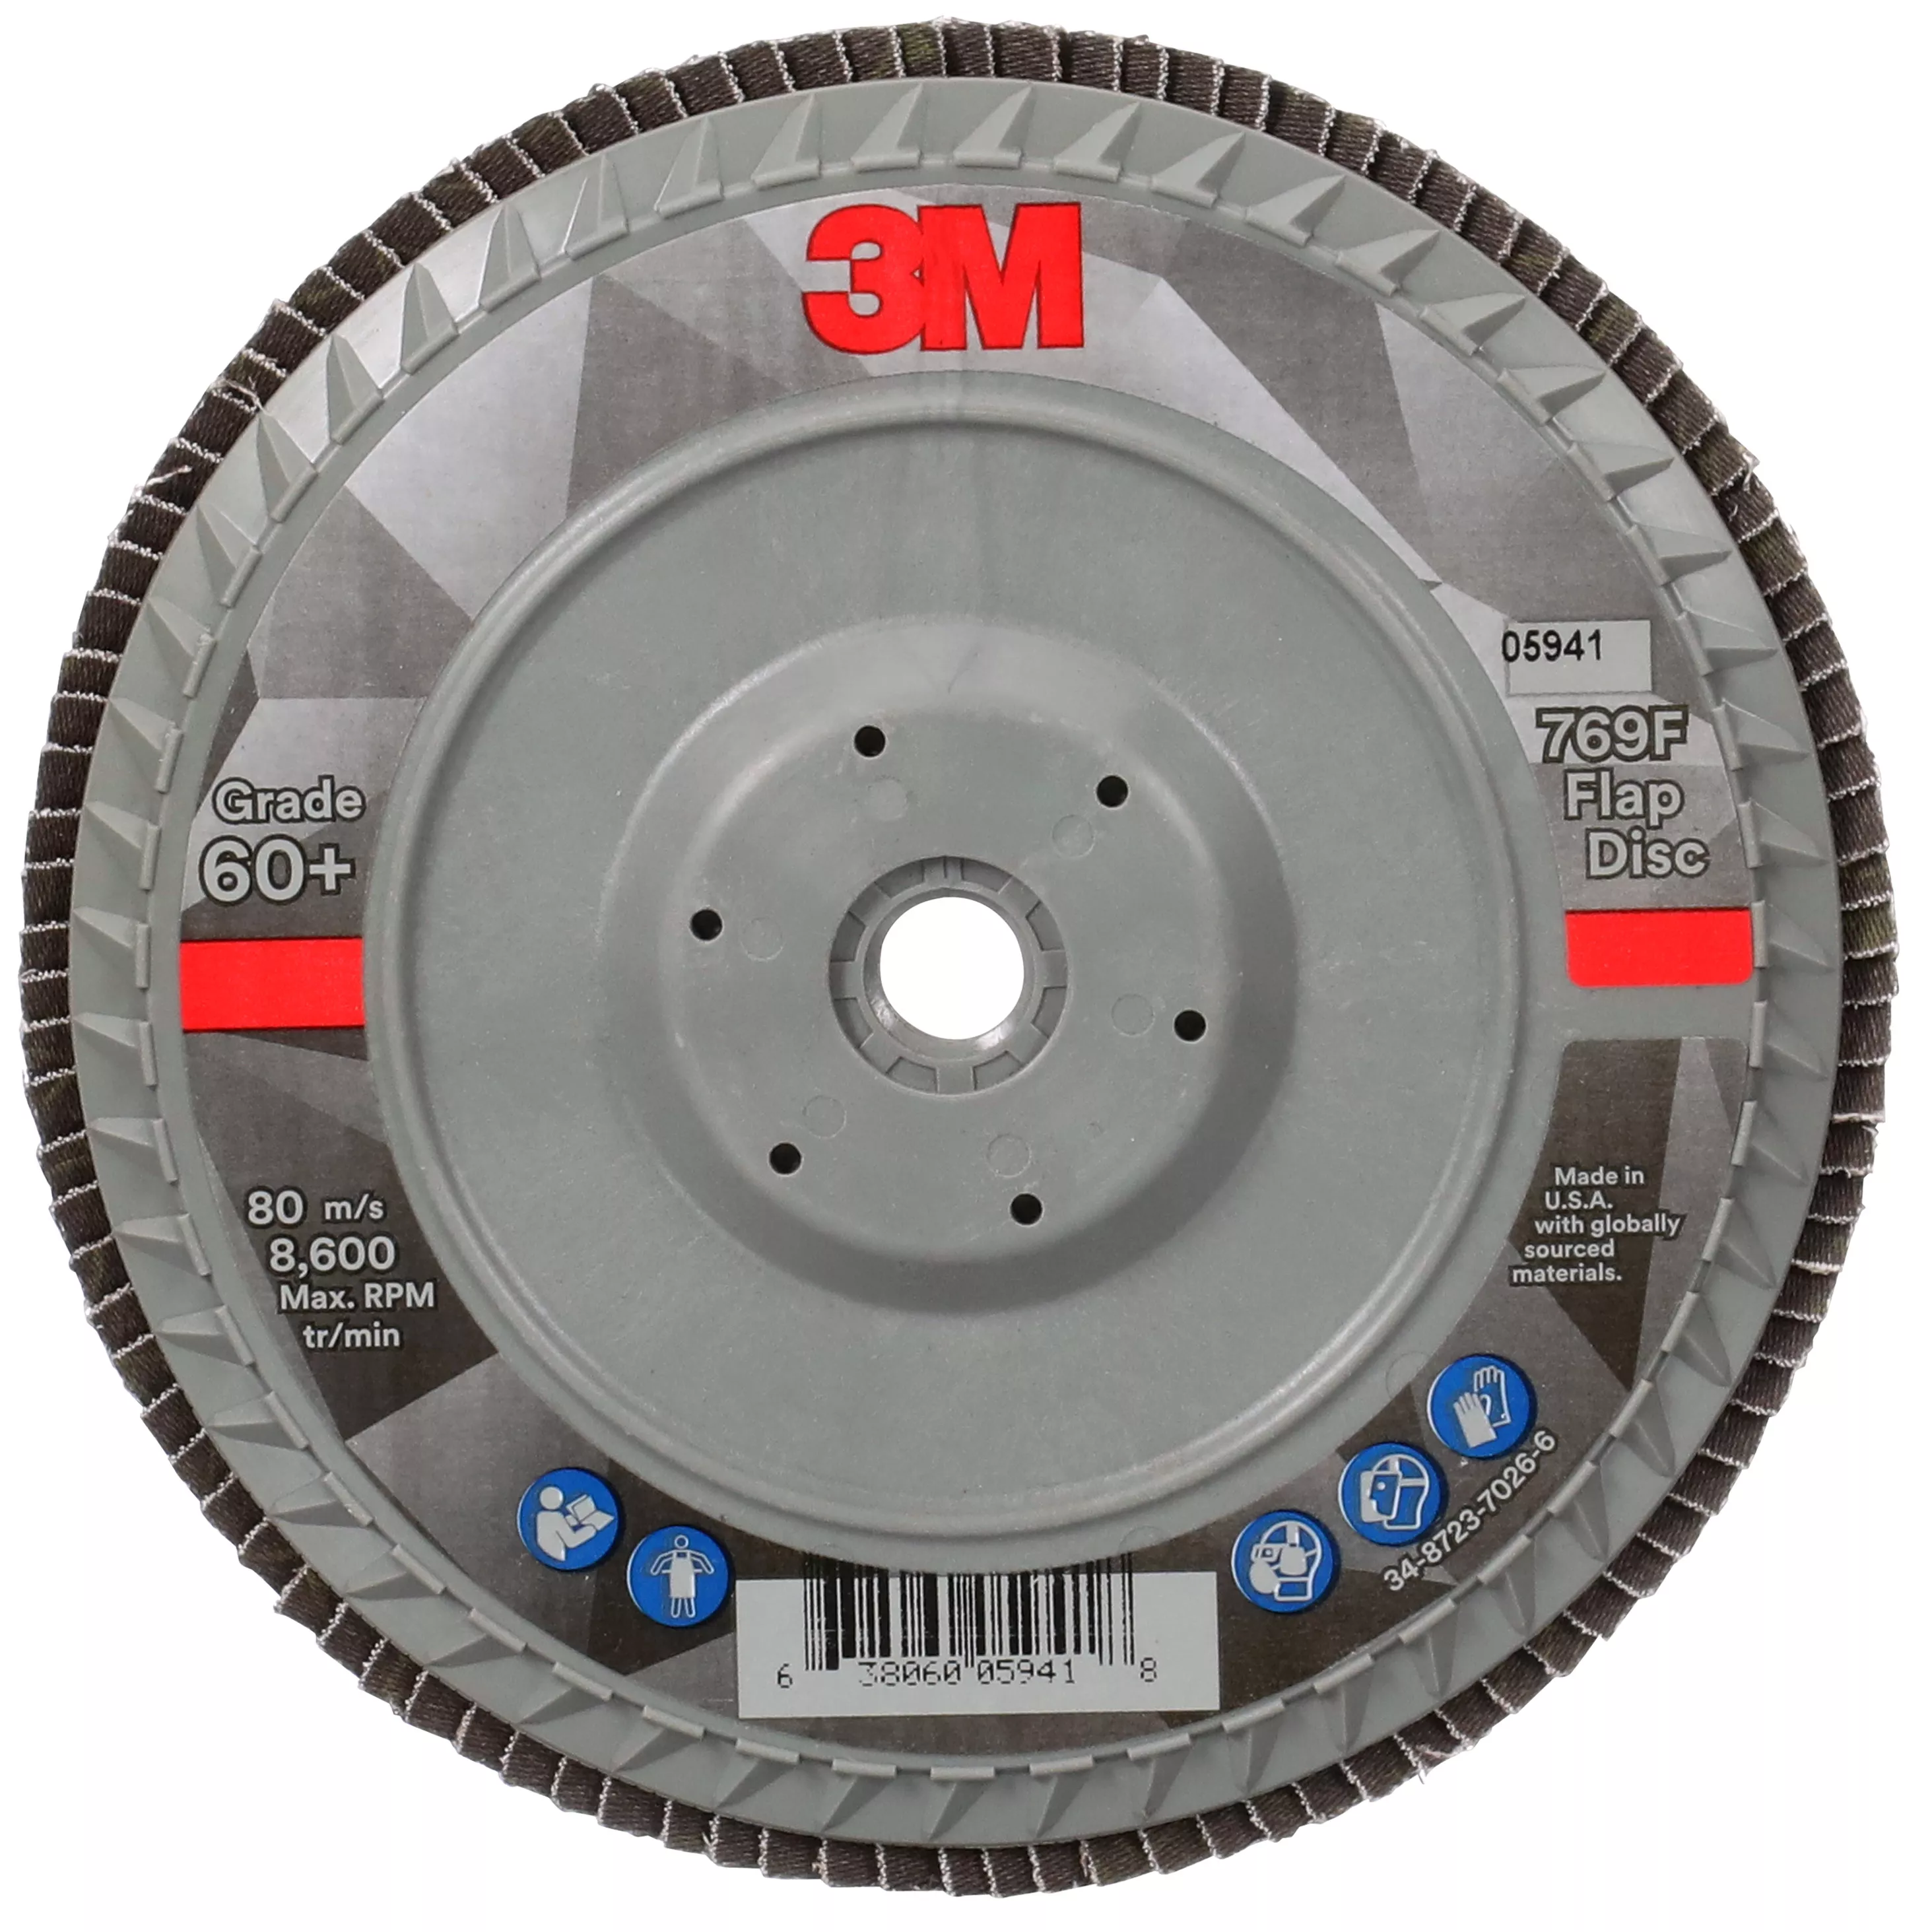 SKU 7100178191 | 3M™ Flap Disc 769F